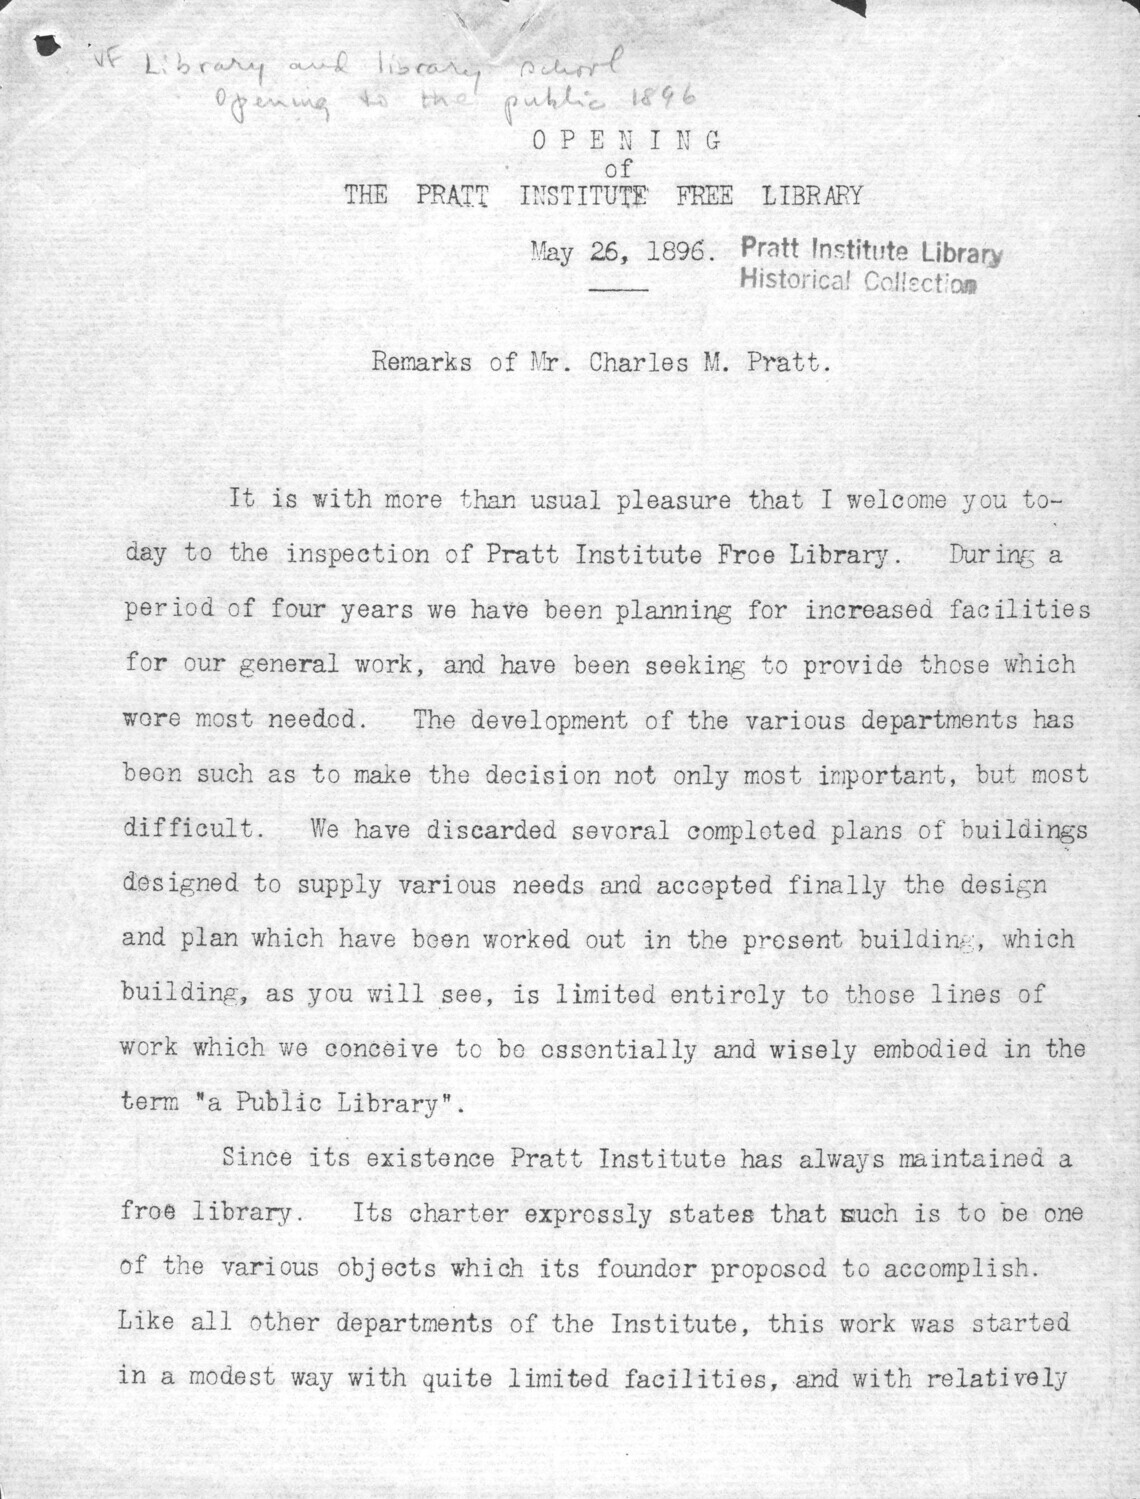 Charles Pratt's Remarks for the Opening of the Pratt Institute Free Library